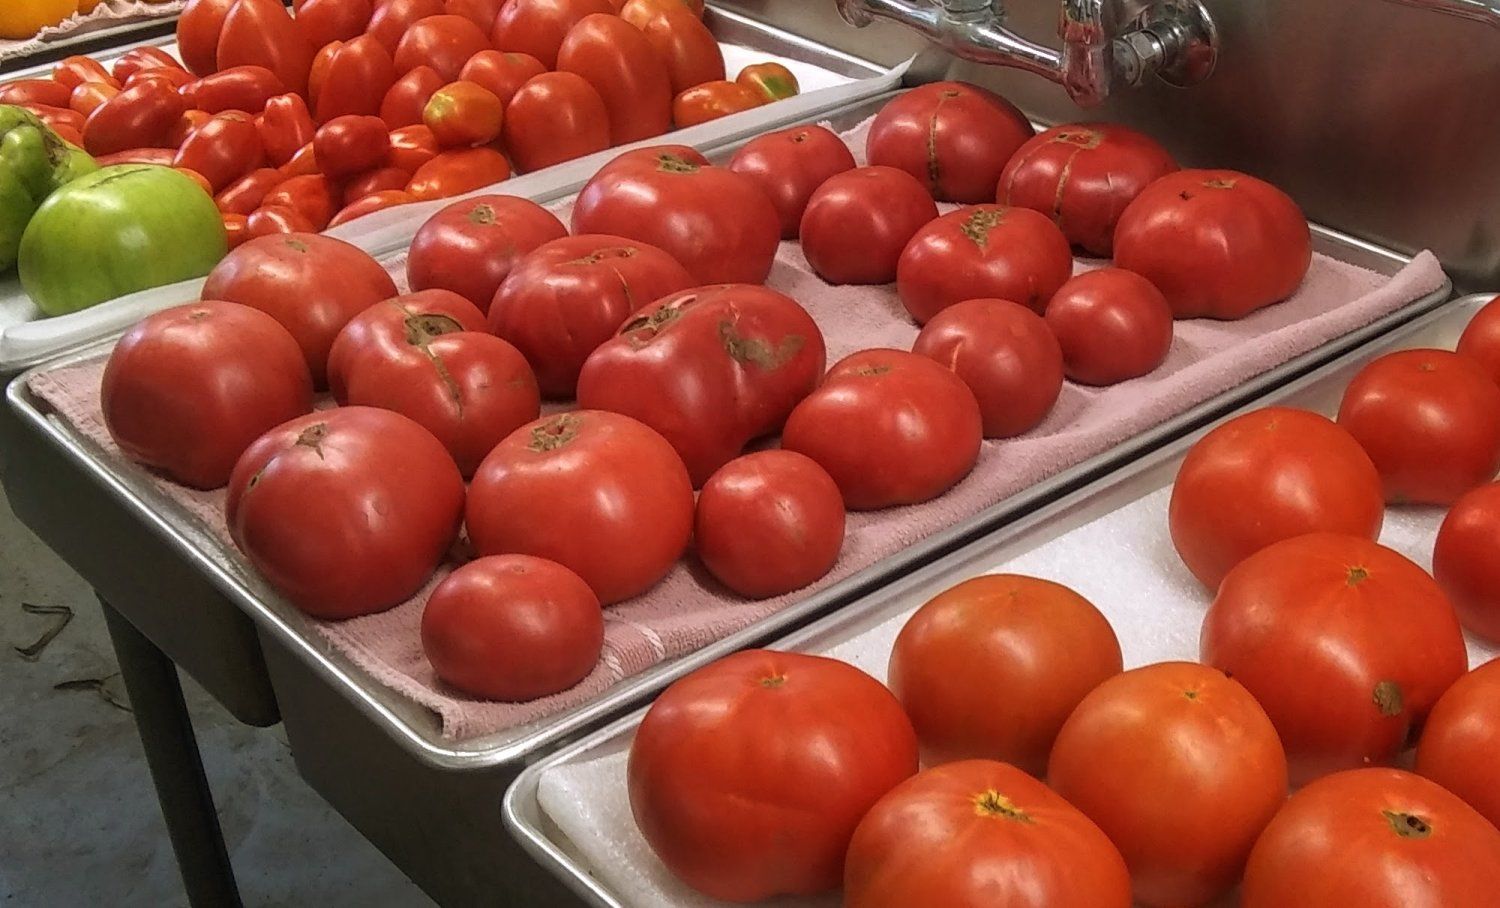 Next Happening: Tomato Season!